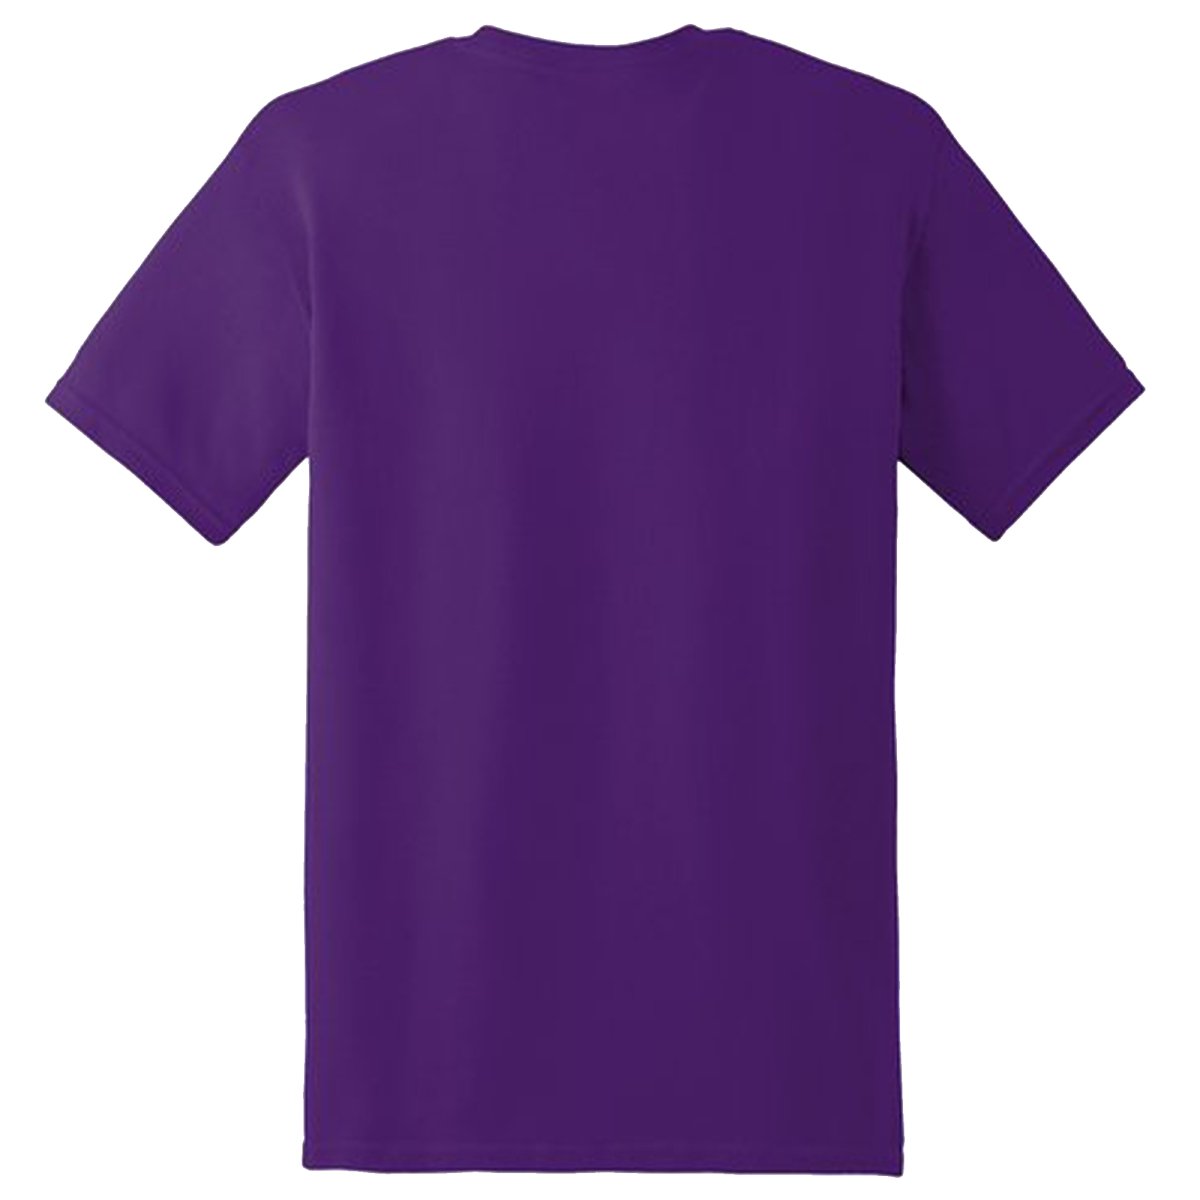 New Orleans Mardi Gras Purple Full Chest Print Tee Shirt